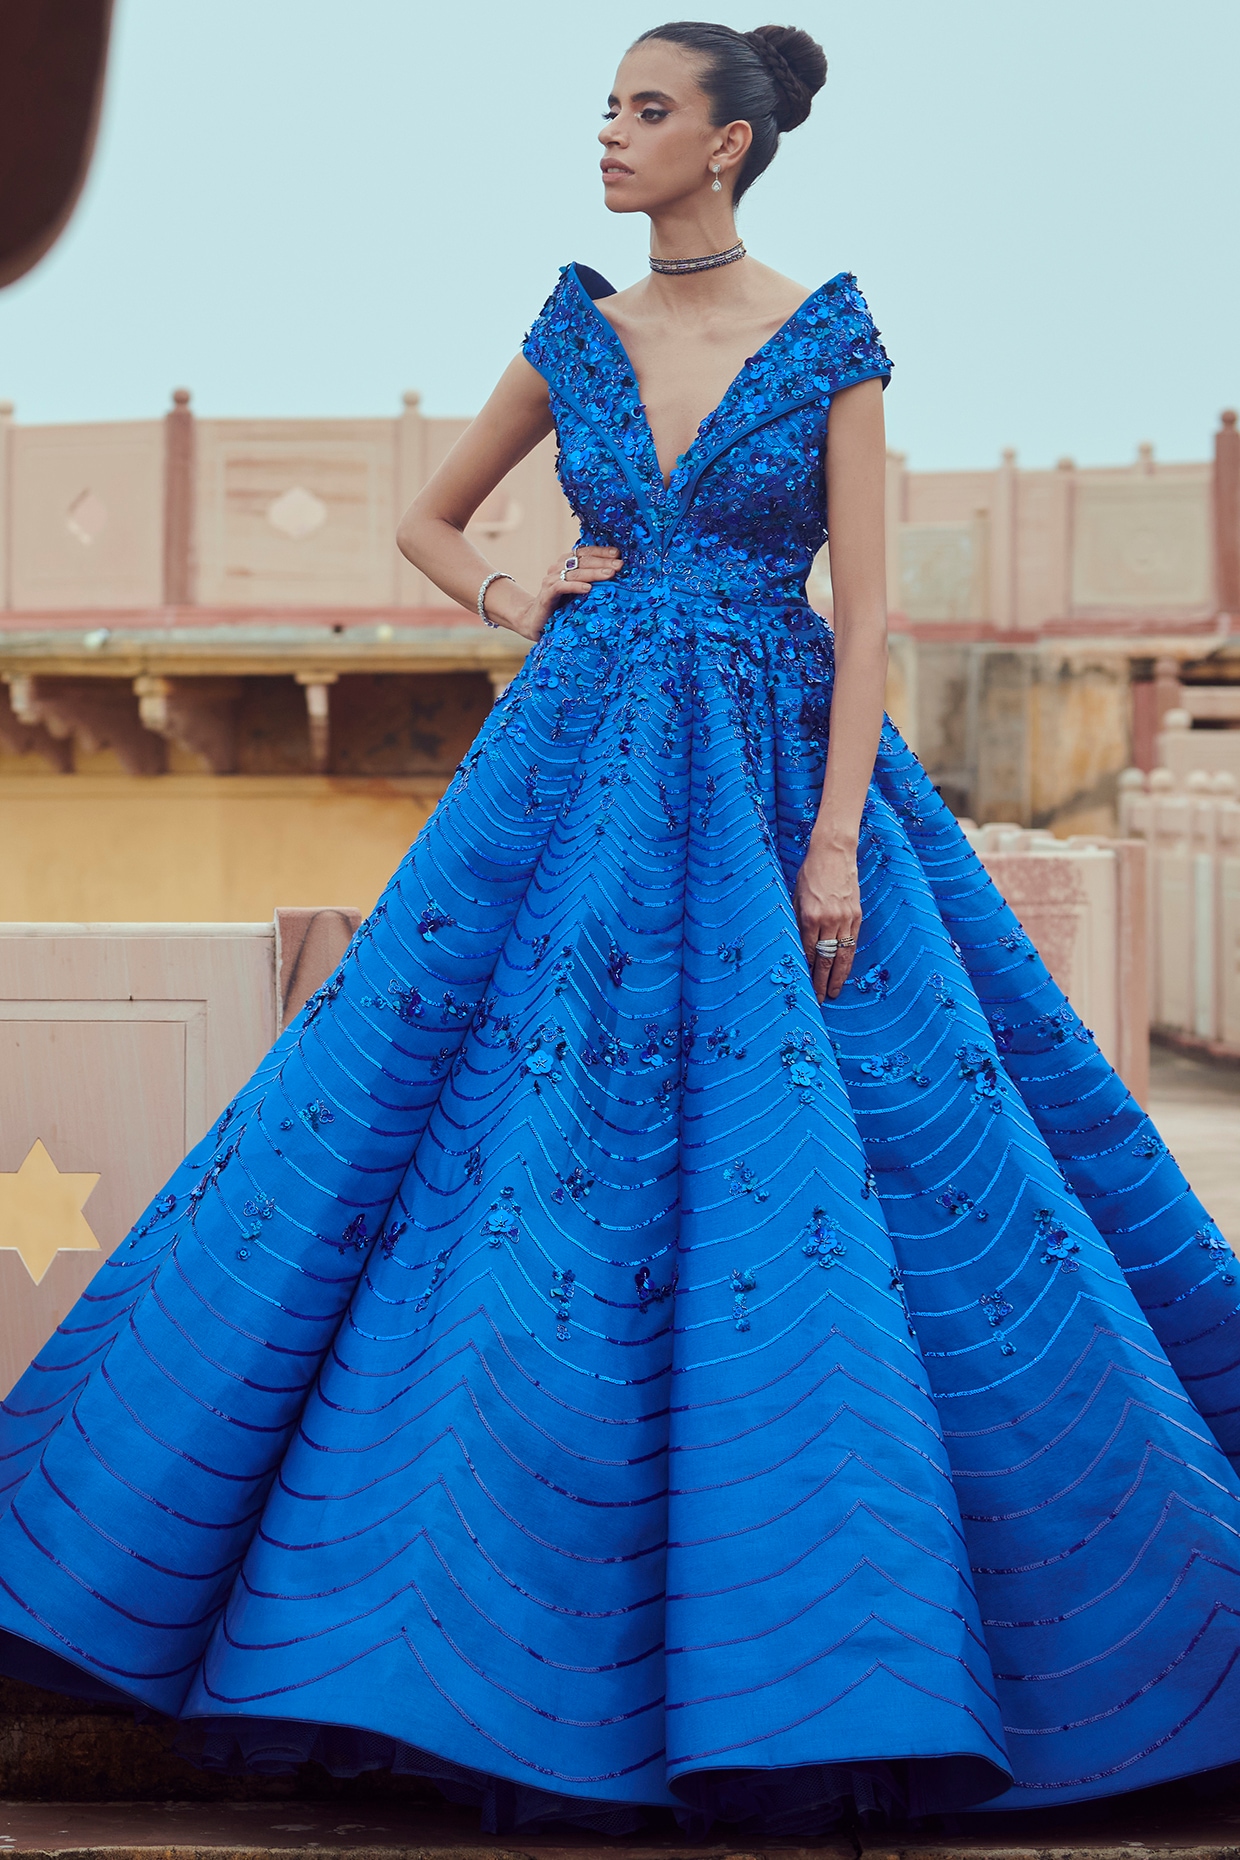 Adhira Boutique - Elegant royal blue gown! | Facebook